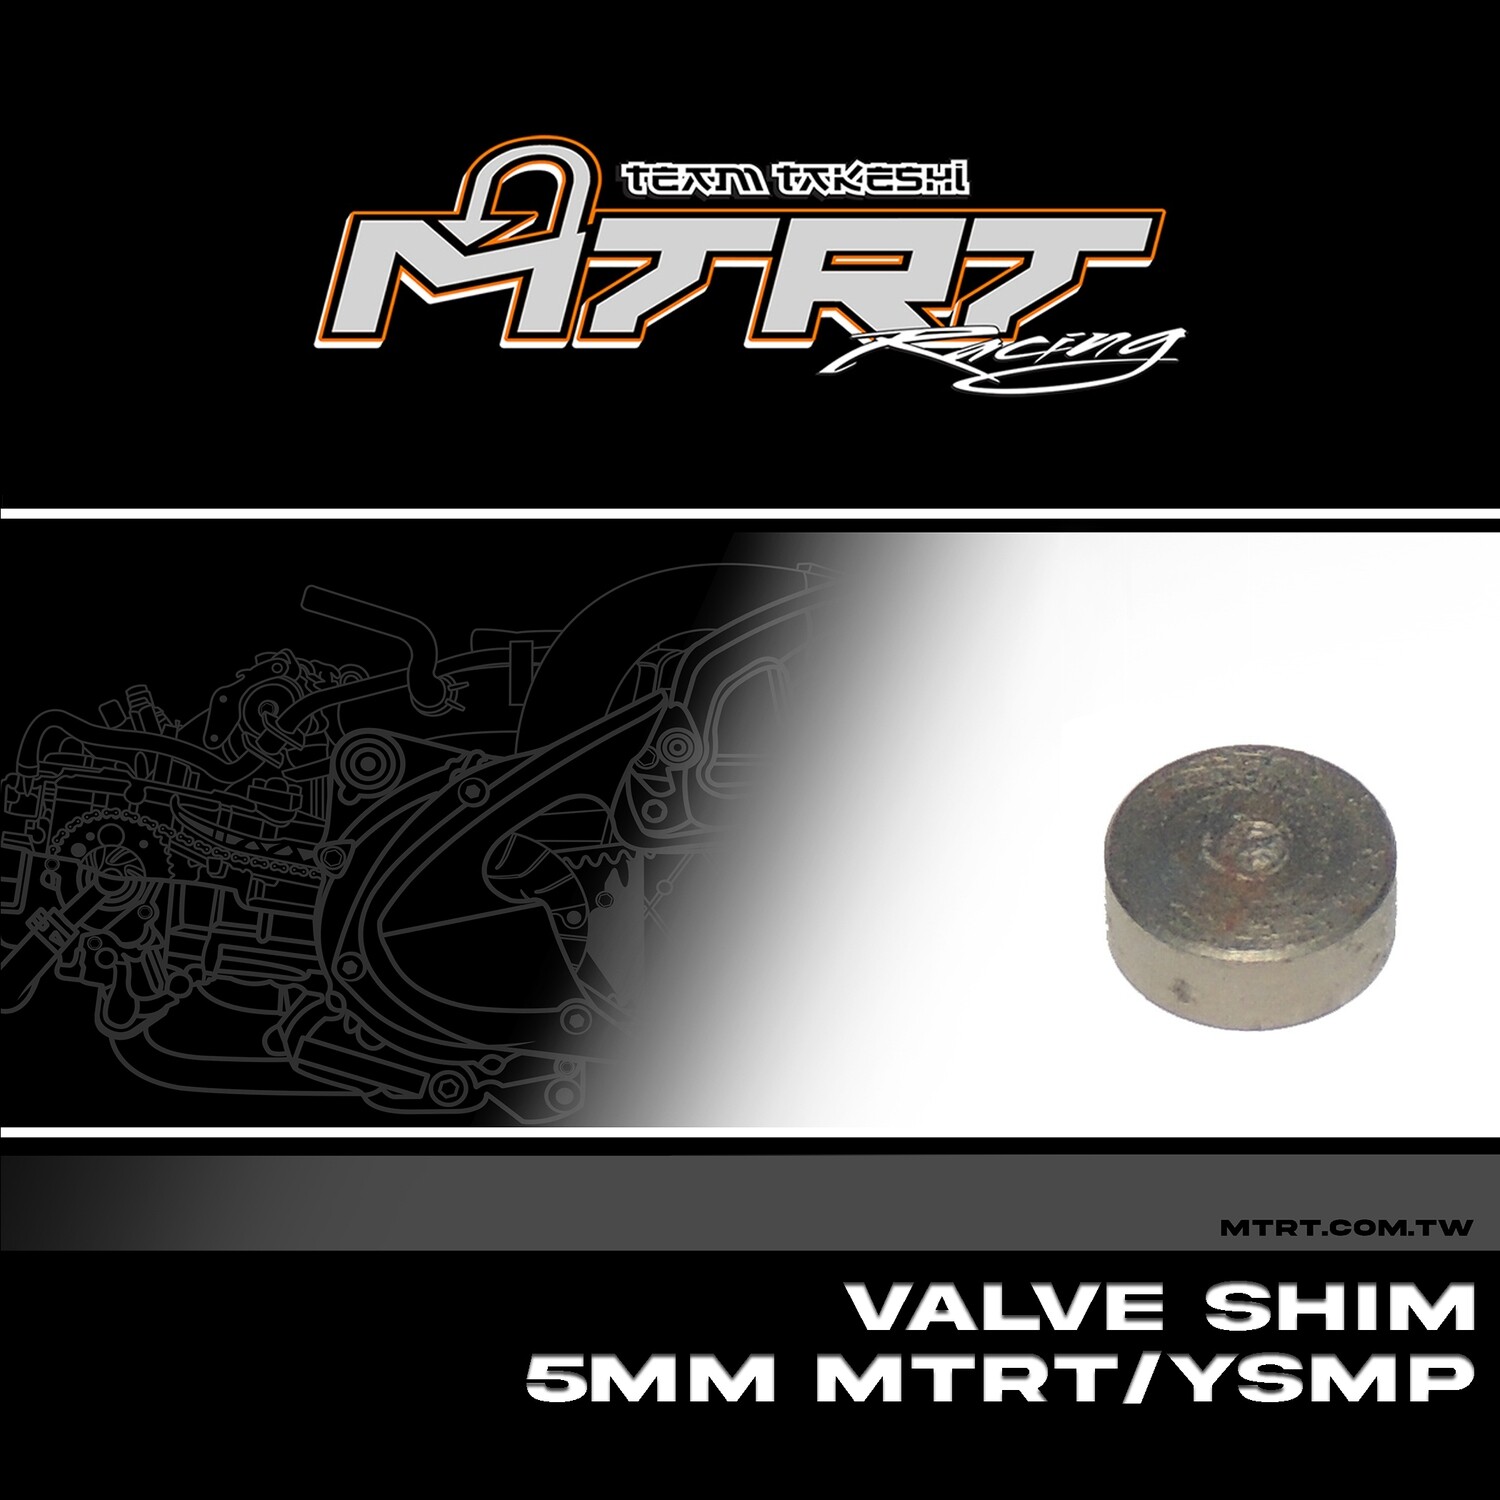 VALVE SHIM ANY VALVES 5mm MTRT/YSMP